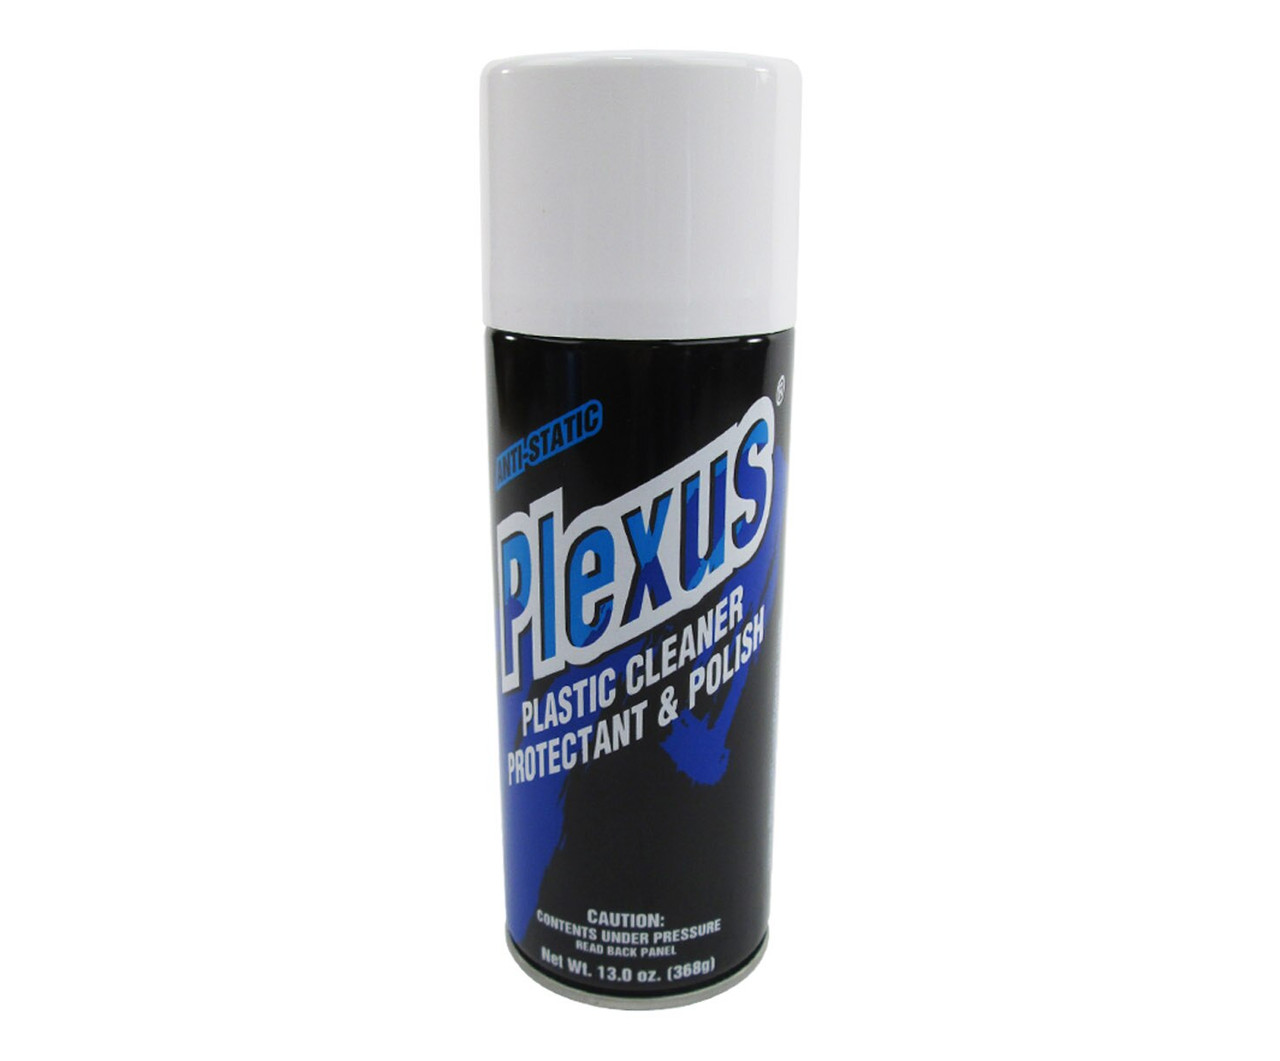 Plexus Plastic Cleaner Protectant and Polish - 13 oz